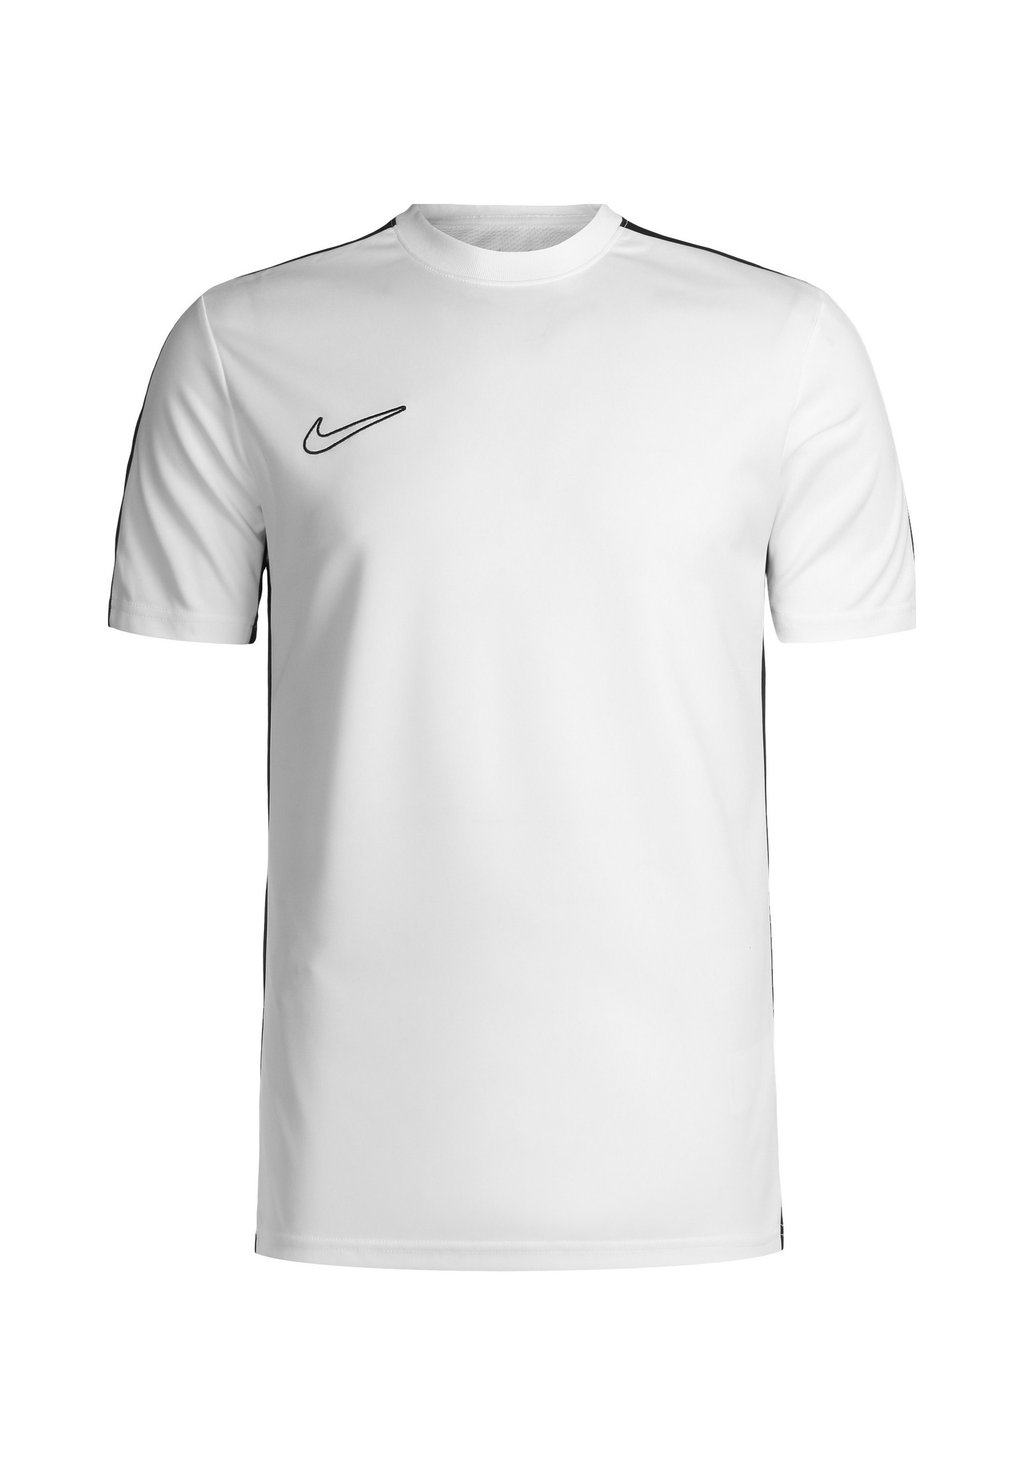 Спортивная футболка DRI-FIT ACADEMY 23 Nike, цвет weissschwarz кроссовки converse zapatillas weissschwarz